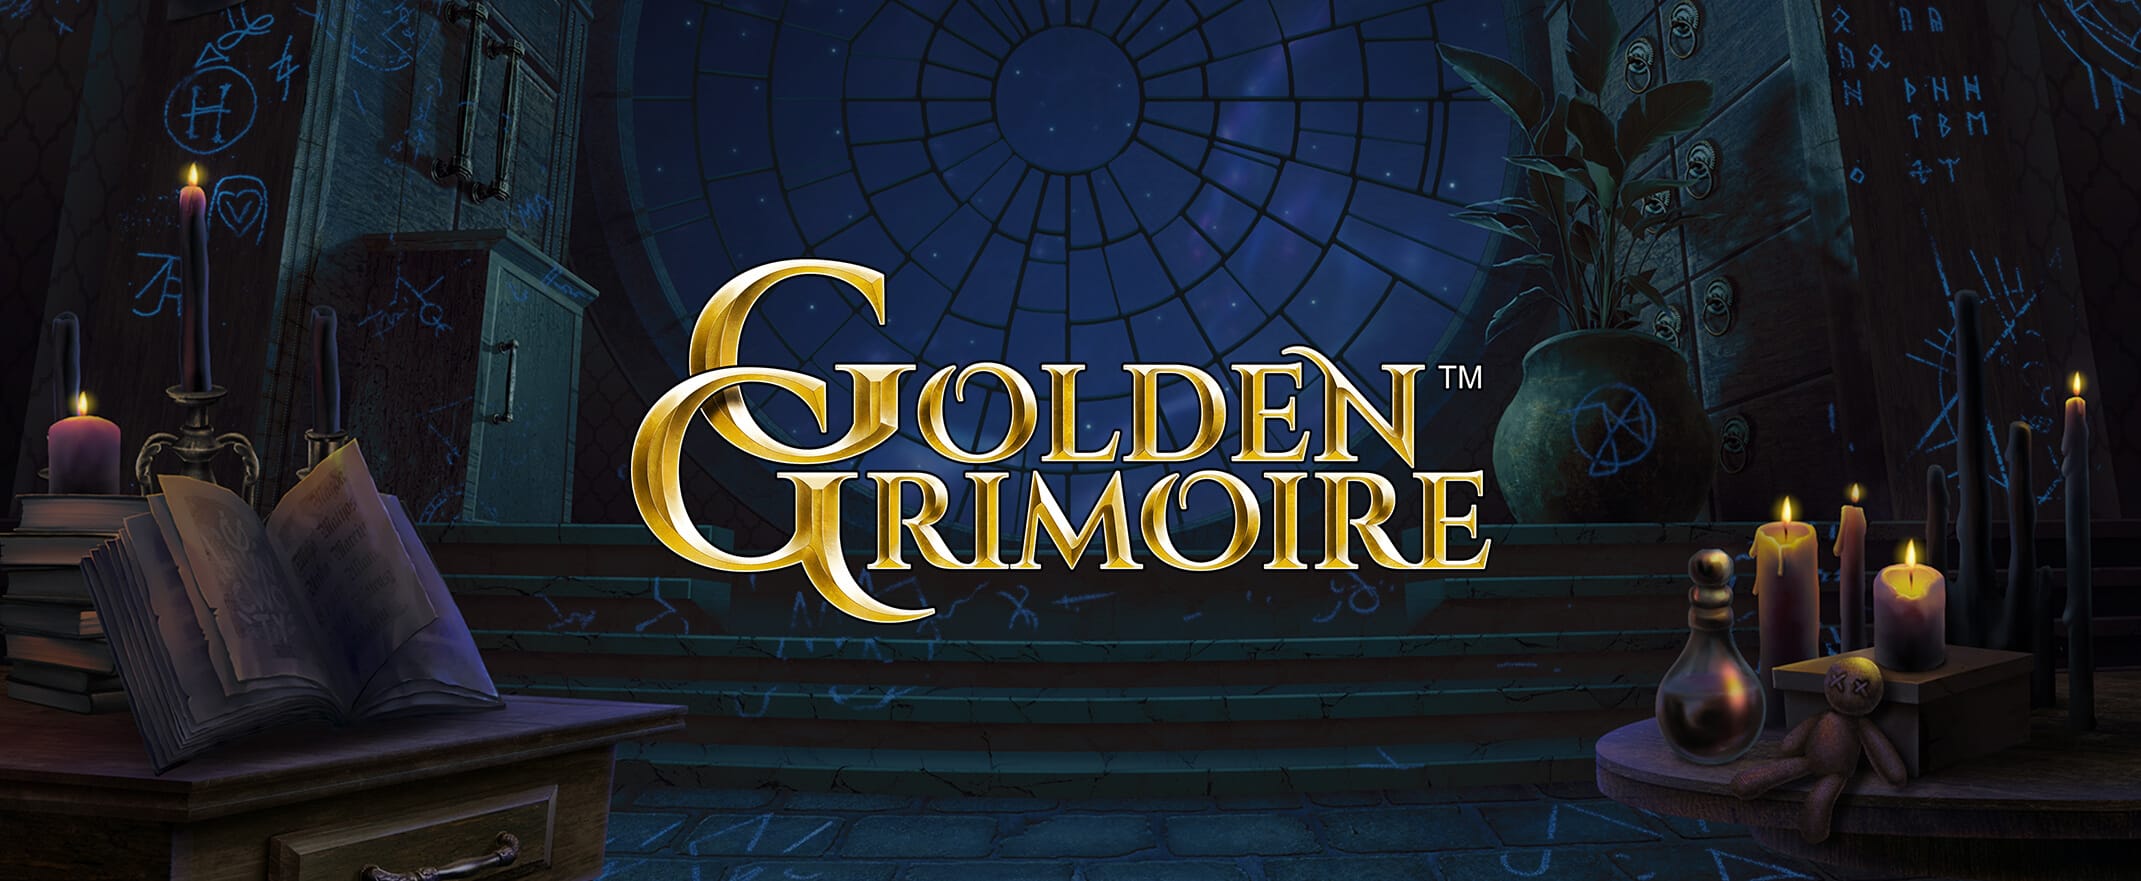 Golden Grimoire Slot Game by NetEnt